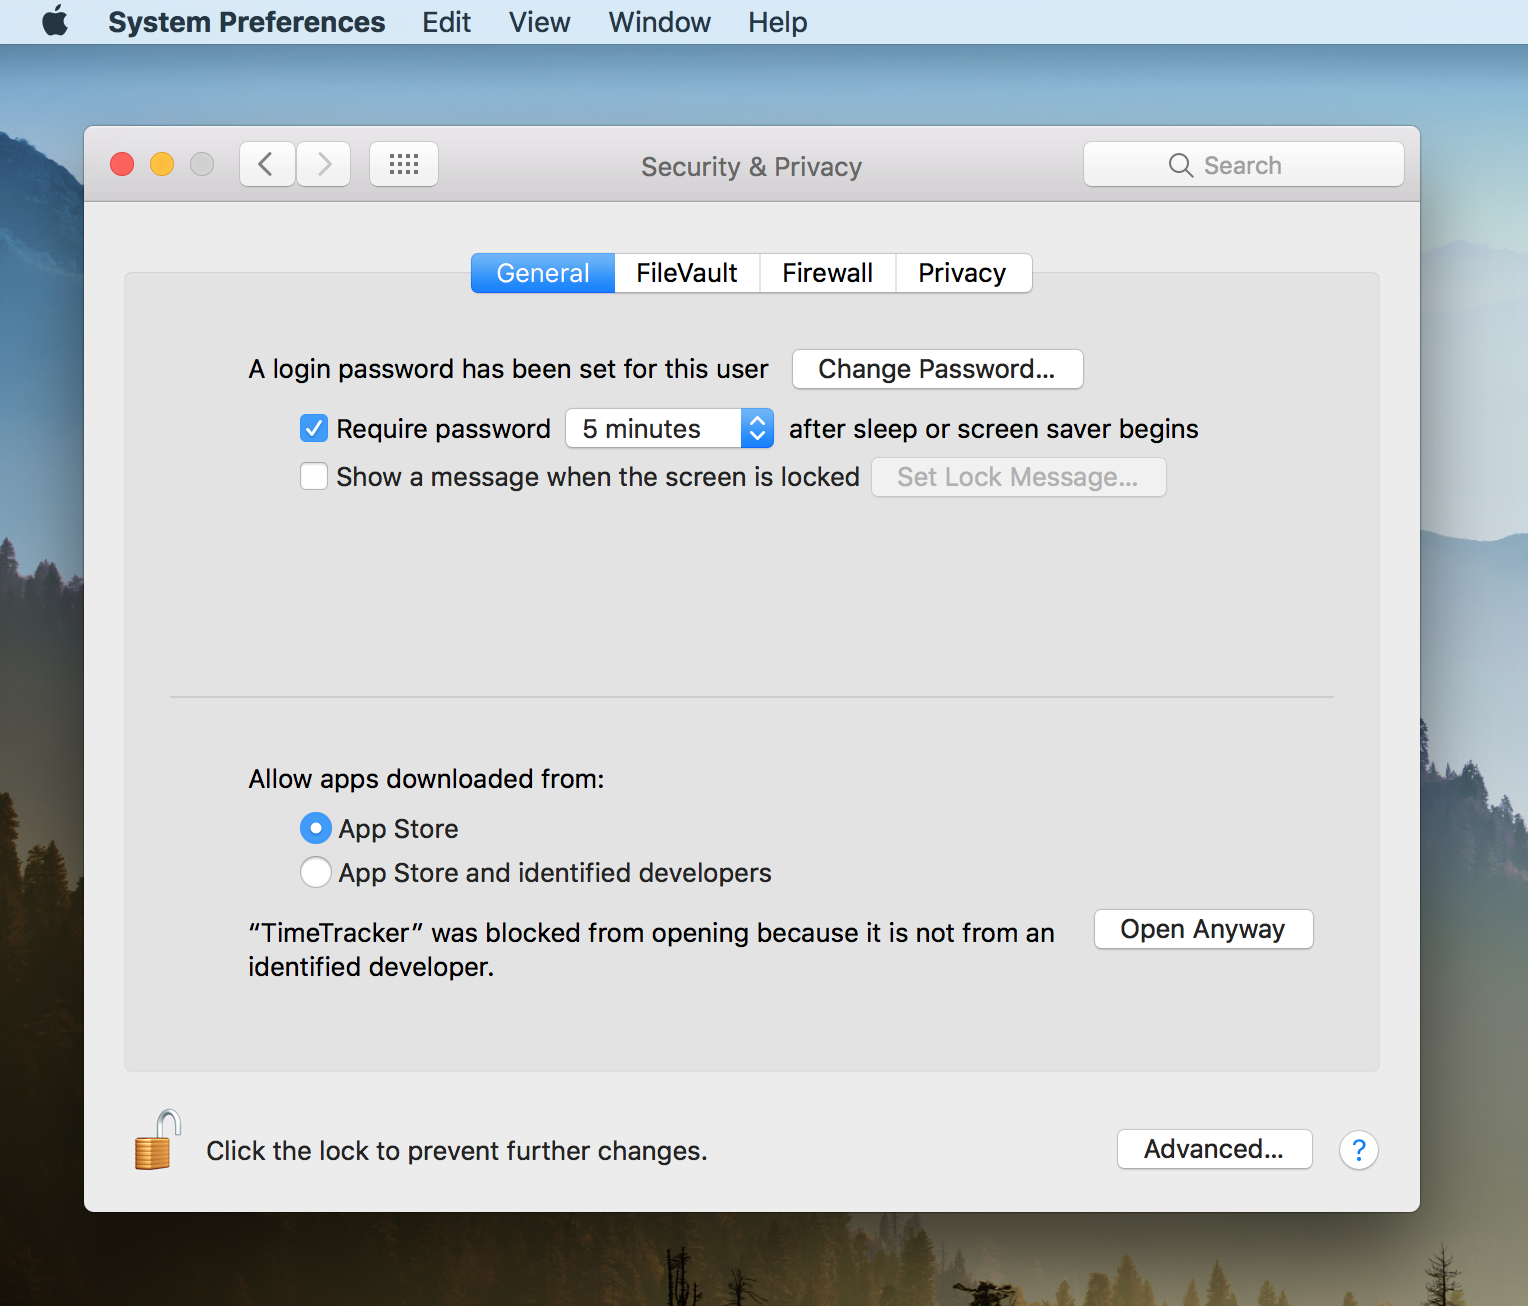 Open Apps Downlaoded Online Mac Os X